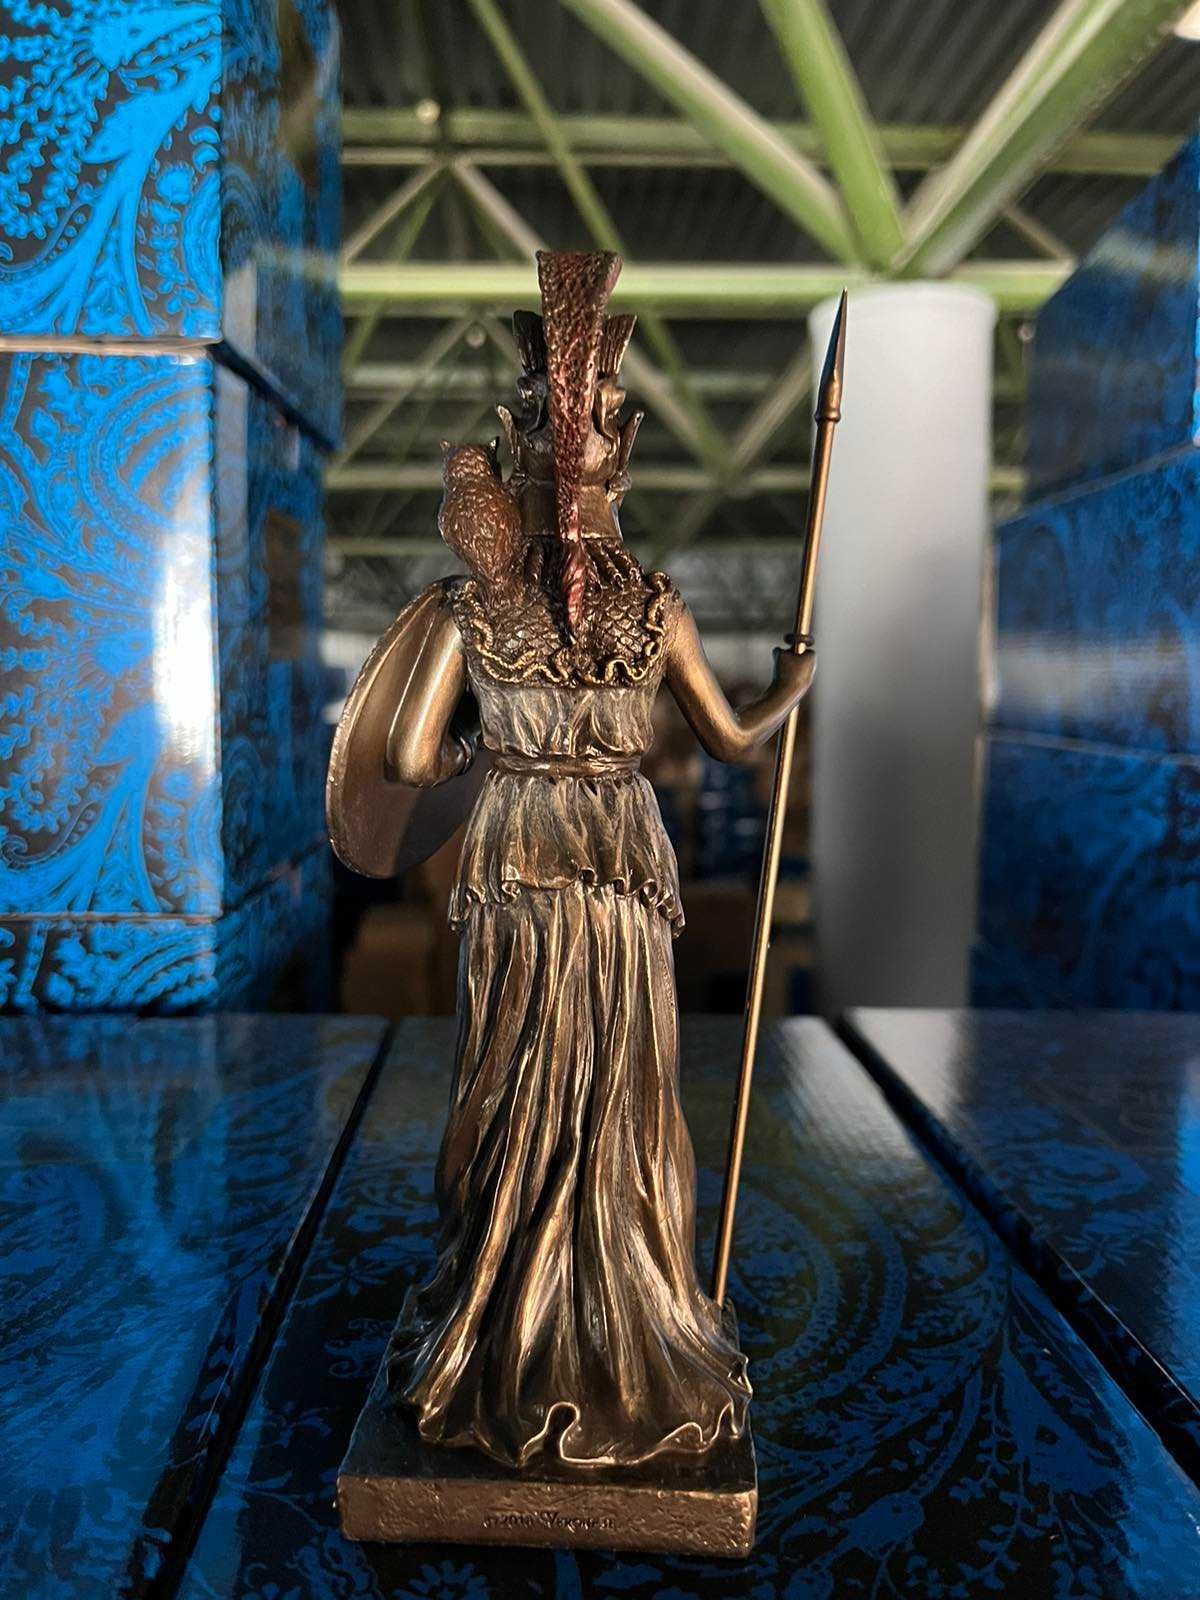 Статуэтка Veronese Афина, богиня мудрости WS-1008